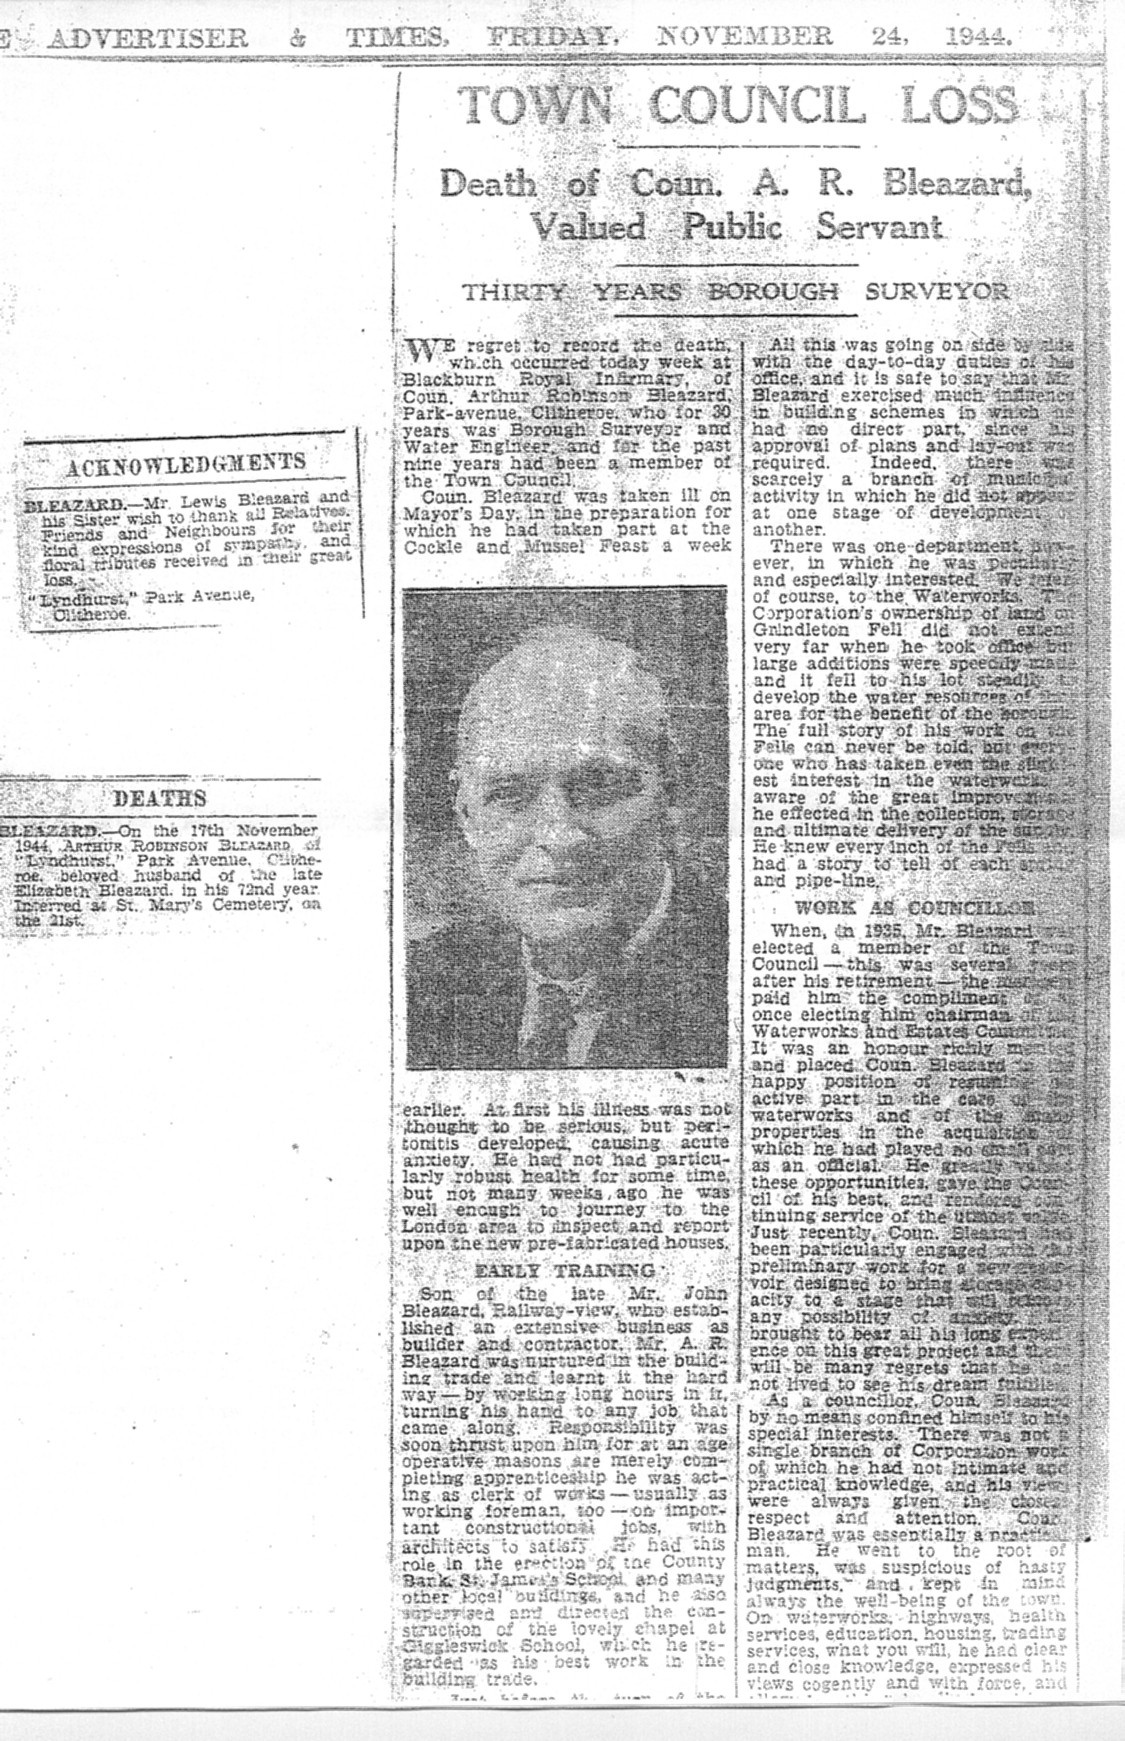 bleazard/images/Arthur_Robinson_Bleazard_1873_Obituary_1_in1944